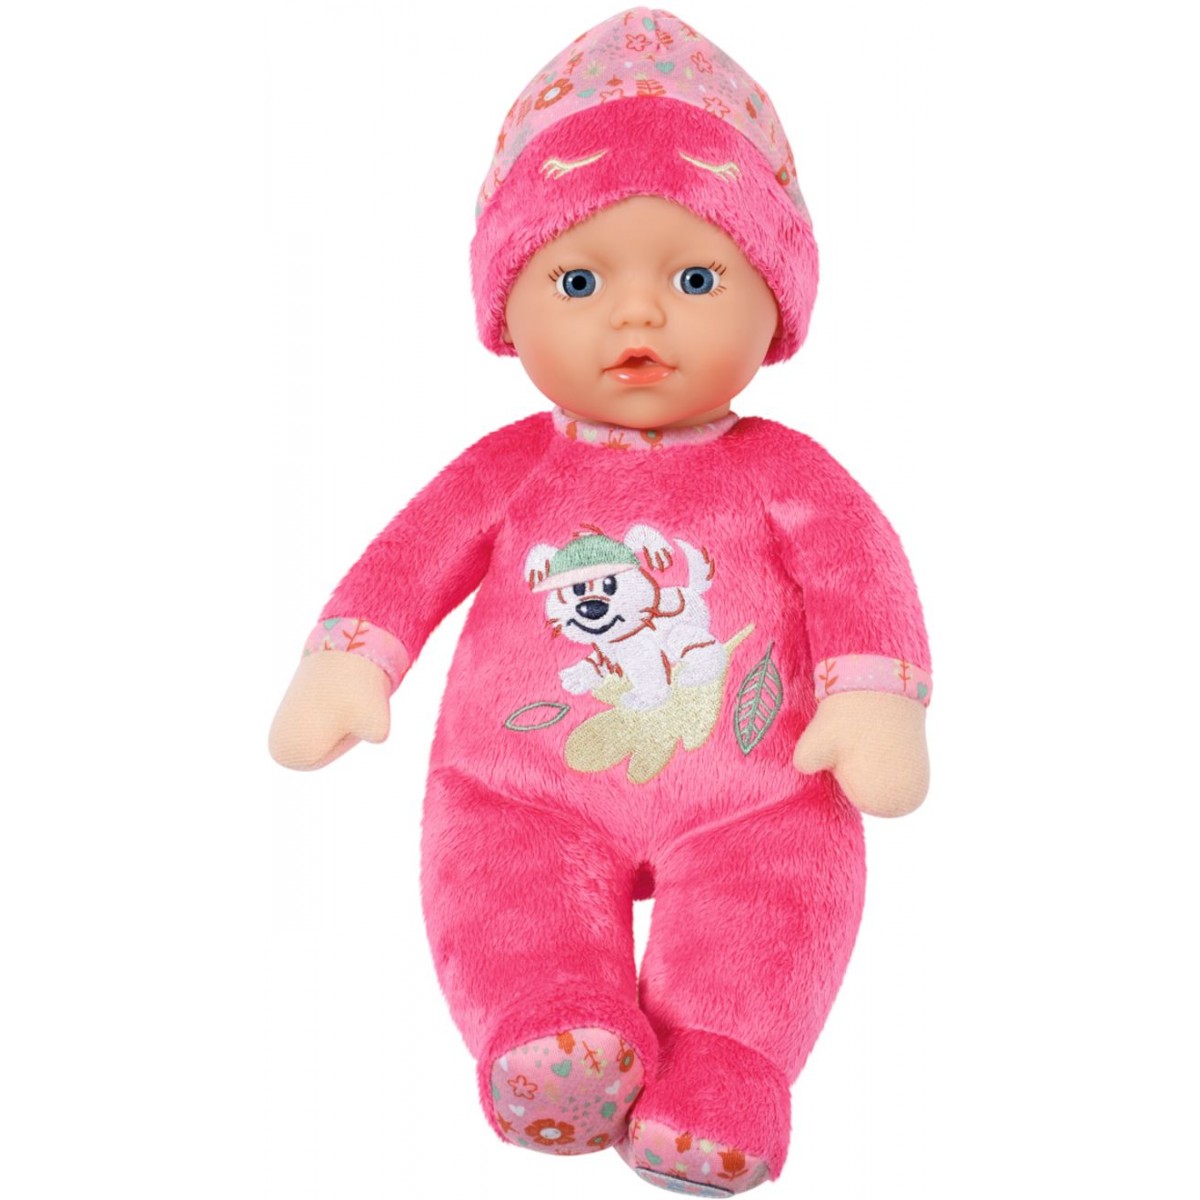 Baby Born - Sleepy for babies, pink, 30cm